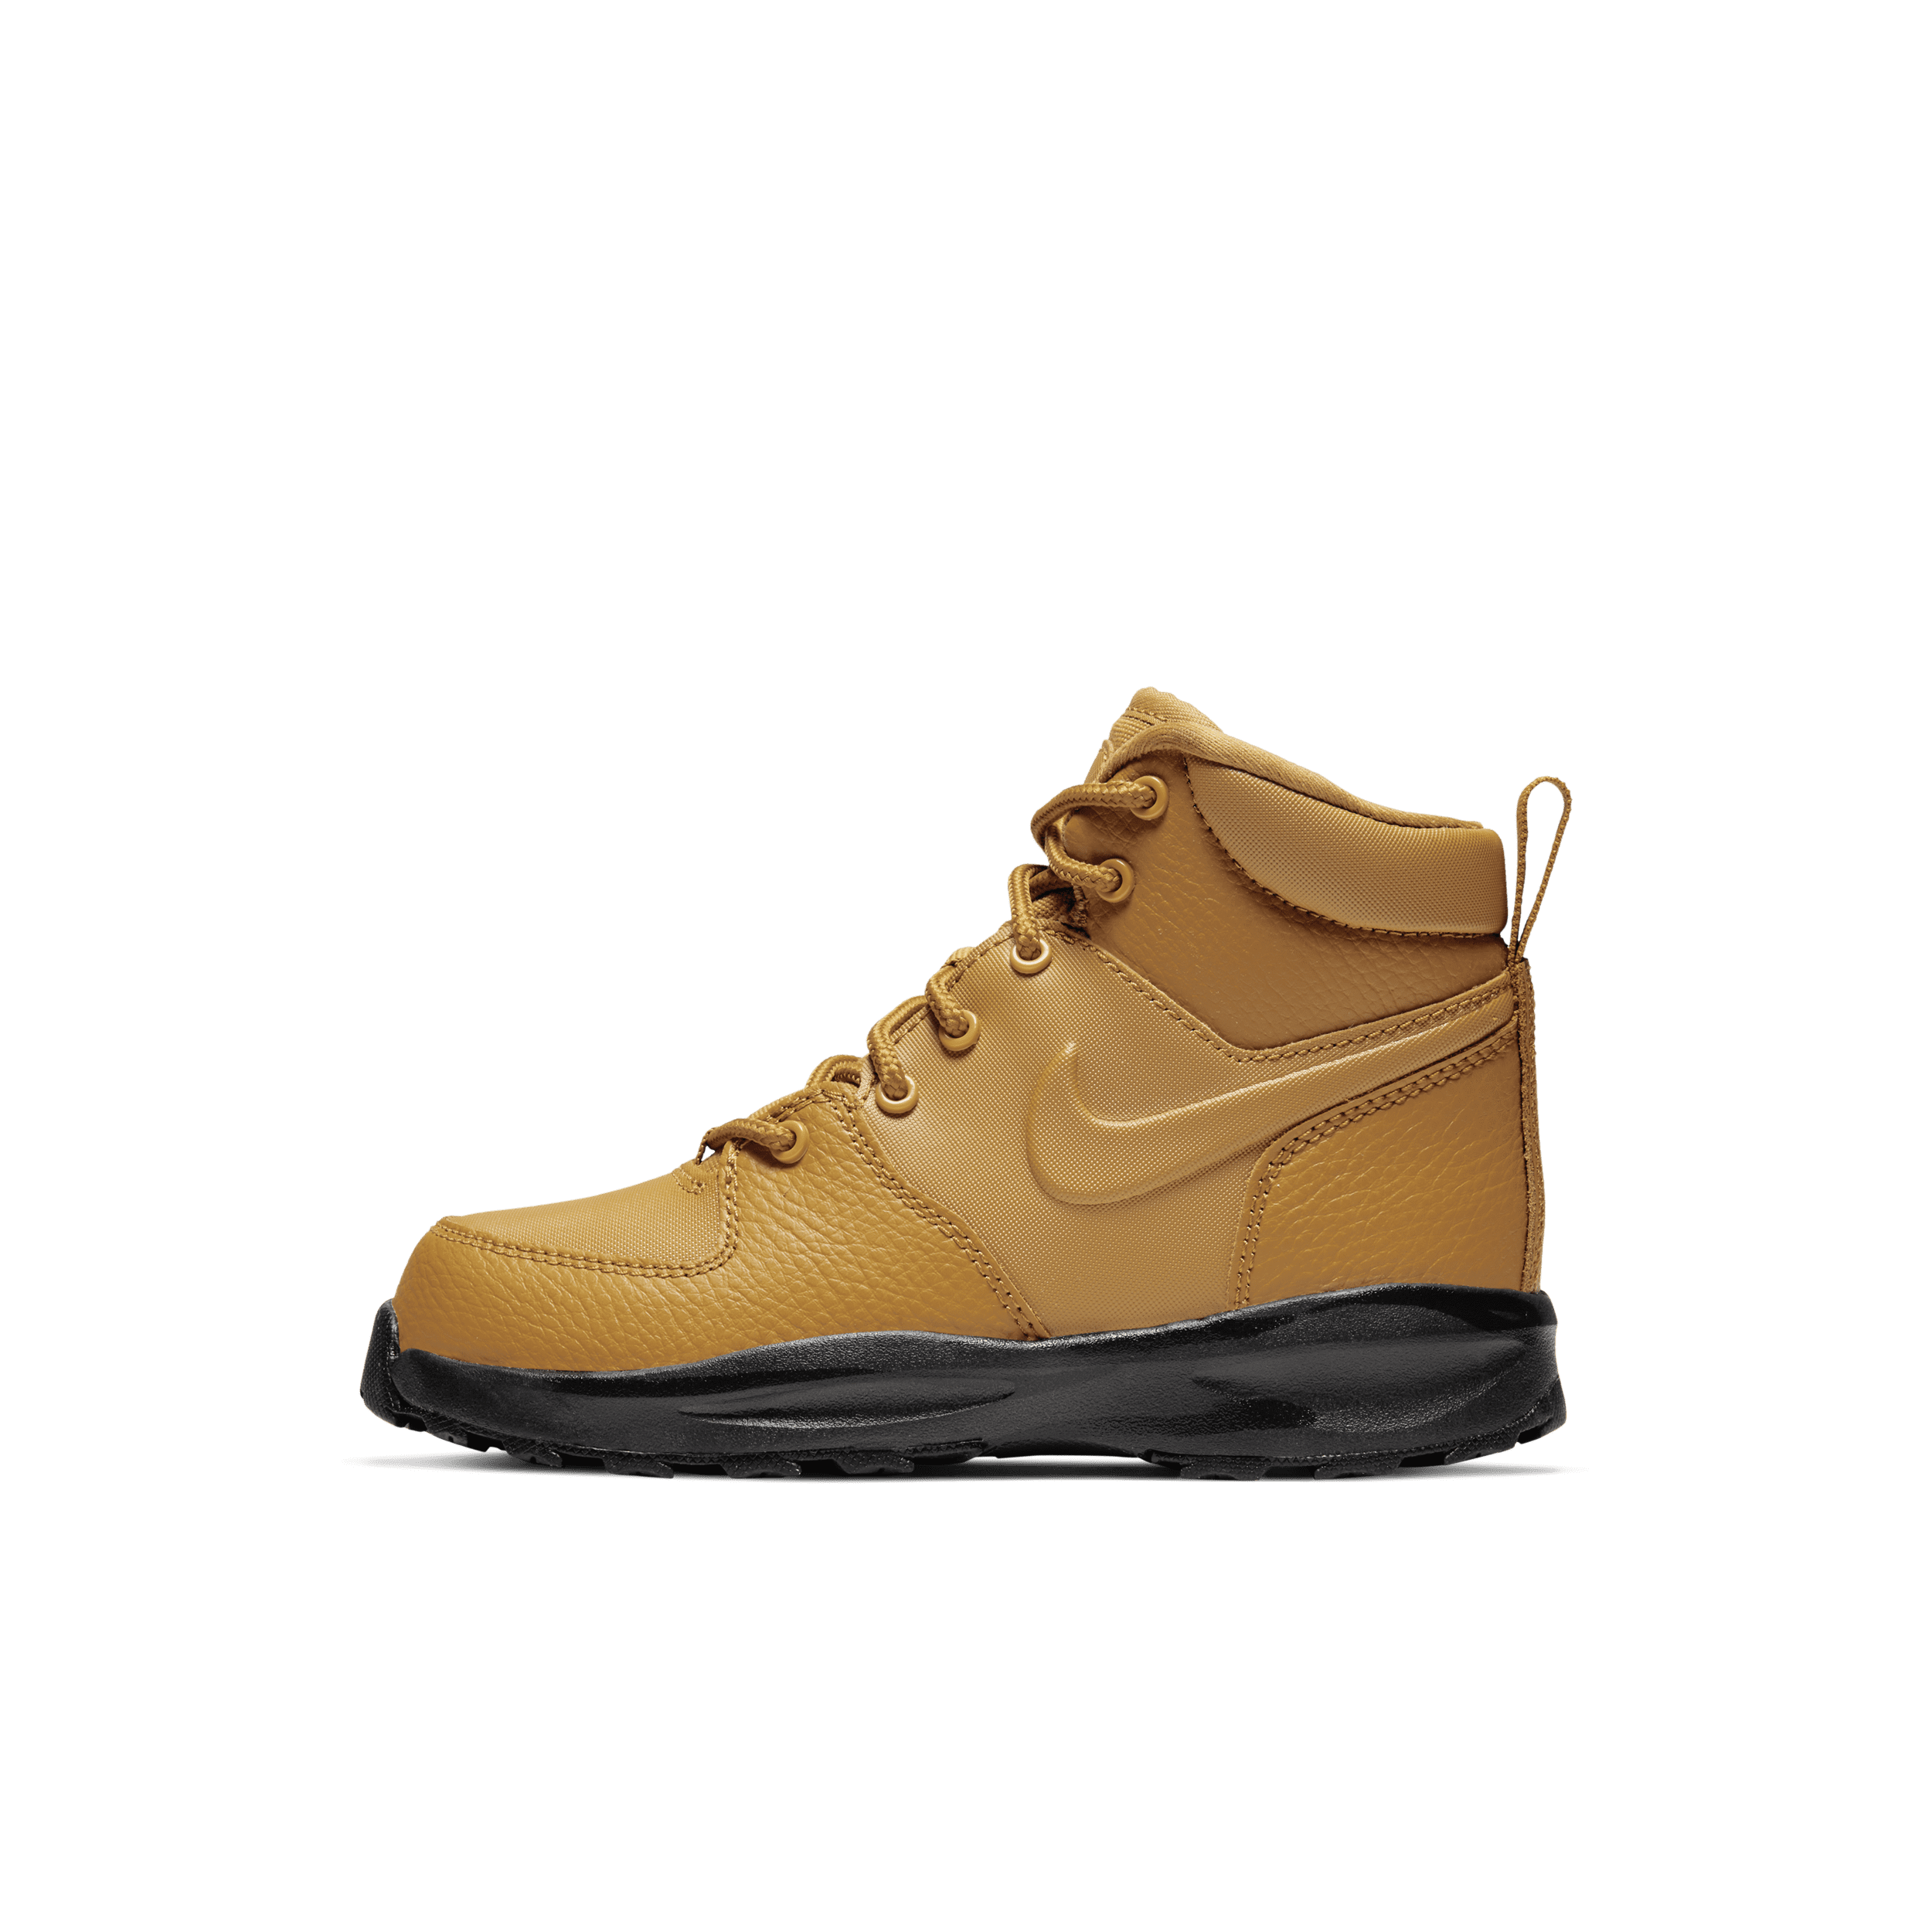 Nike Manoa-støvle til små børn - brun